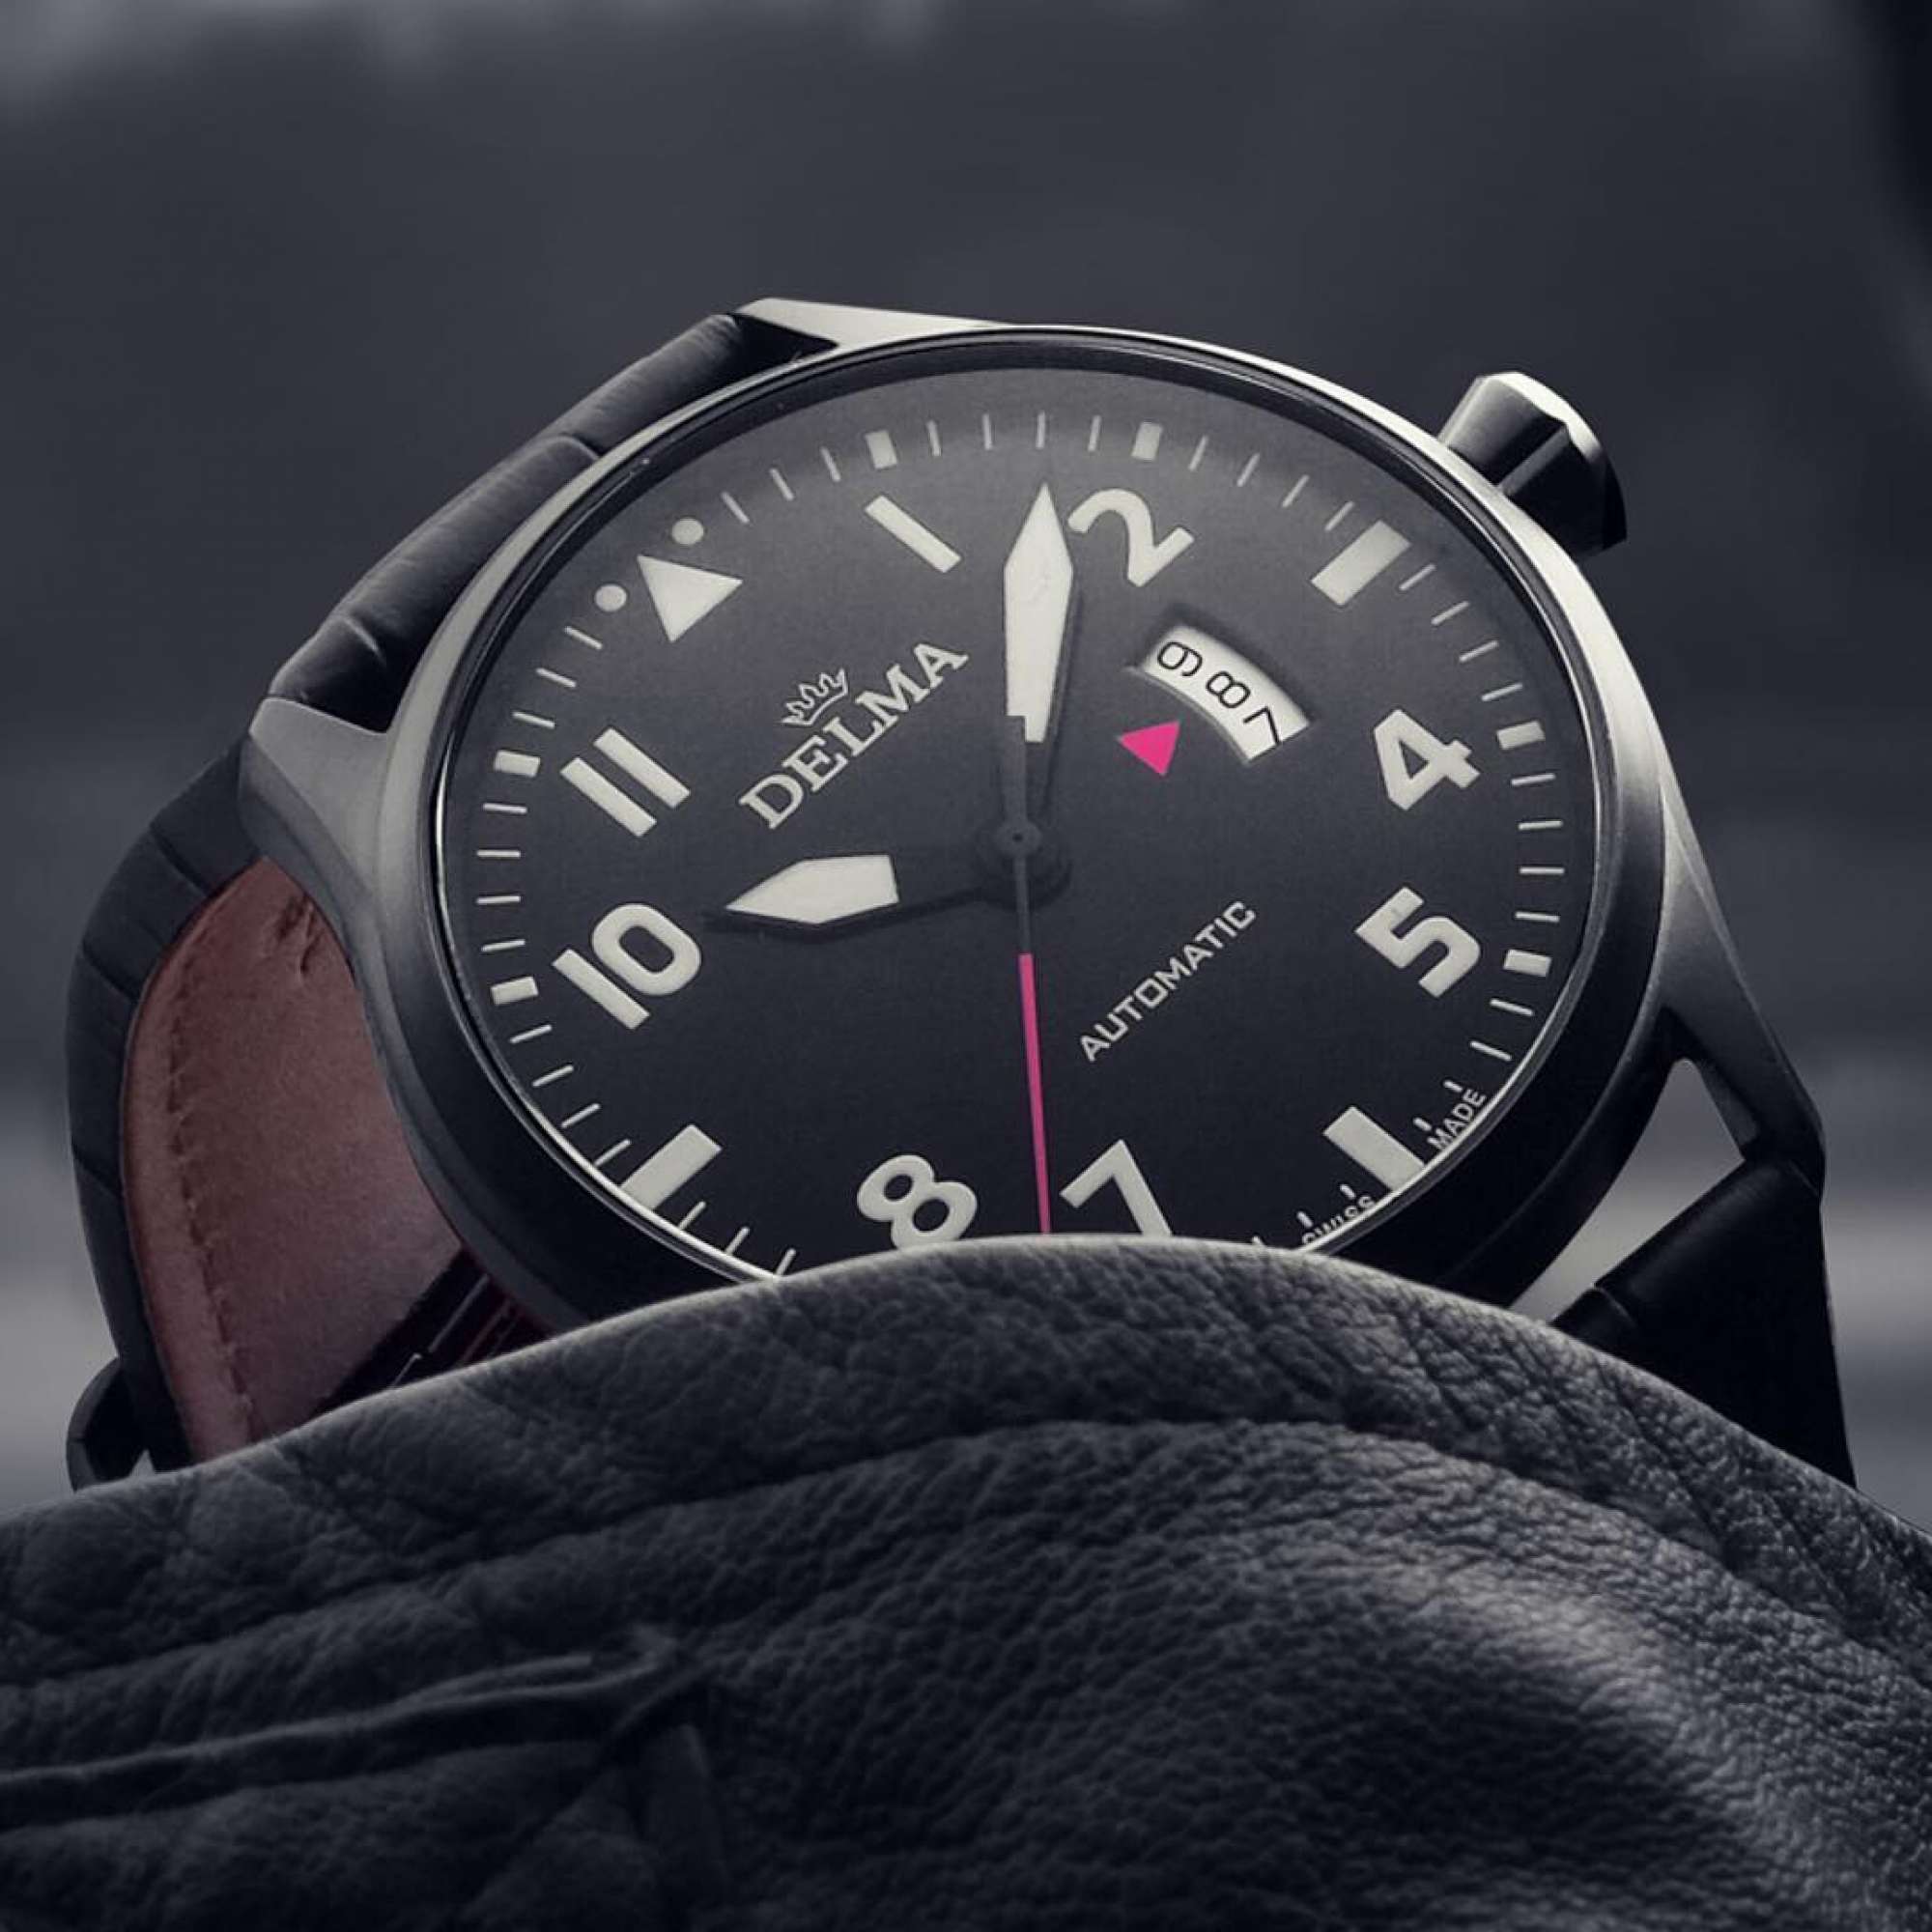 Aero Commander by Delma – Swiss Time